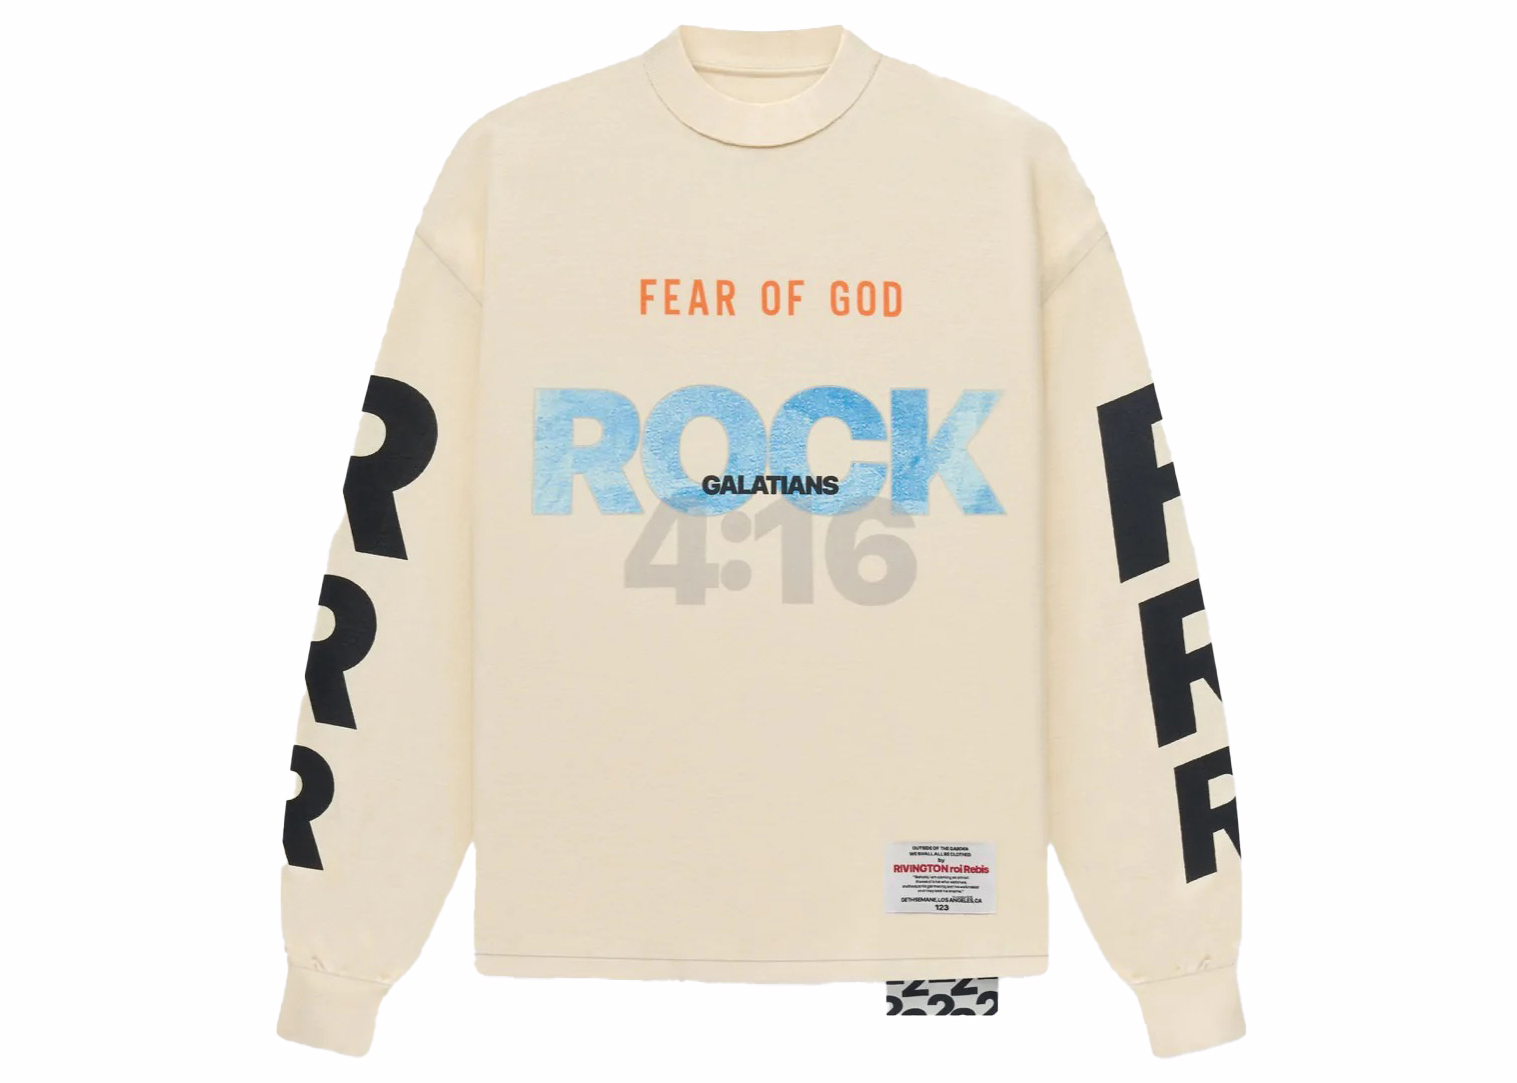 Fear of God x RRR-123 for Dave Chappelle L/S T-shirt Cream Men's